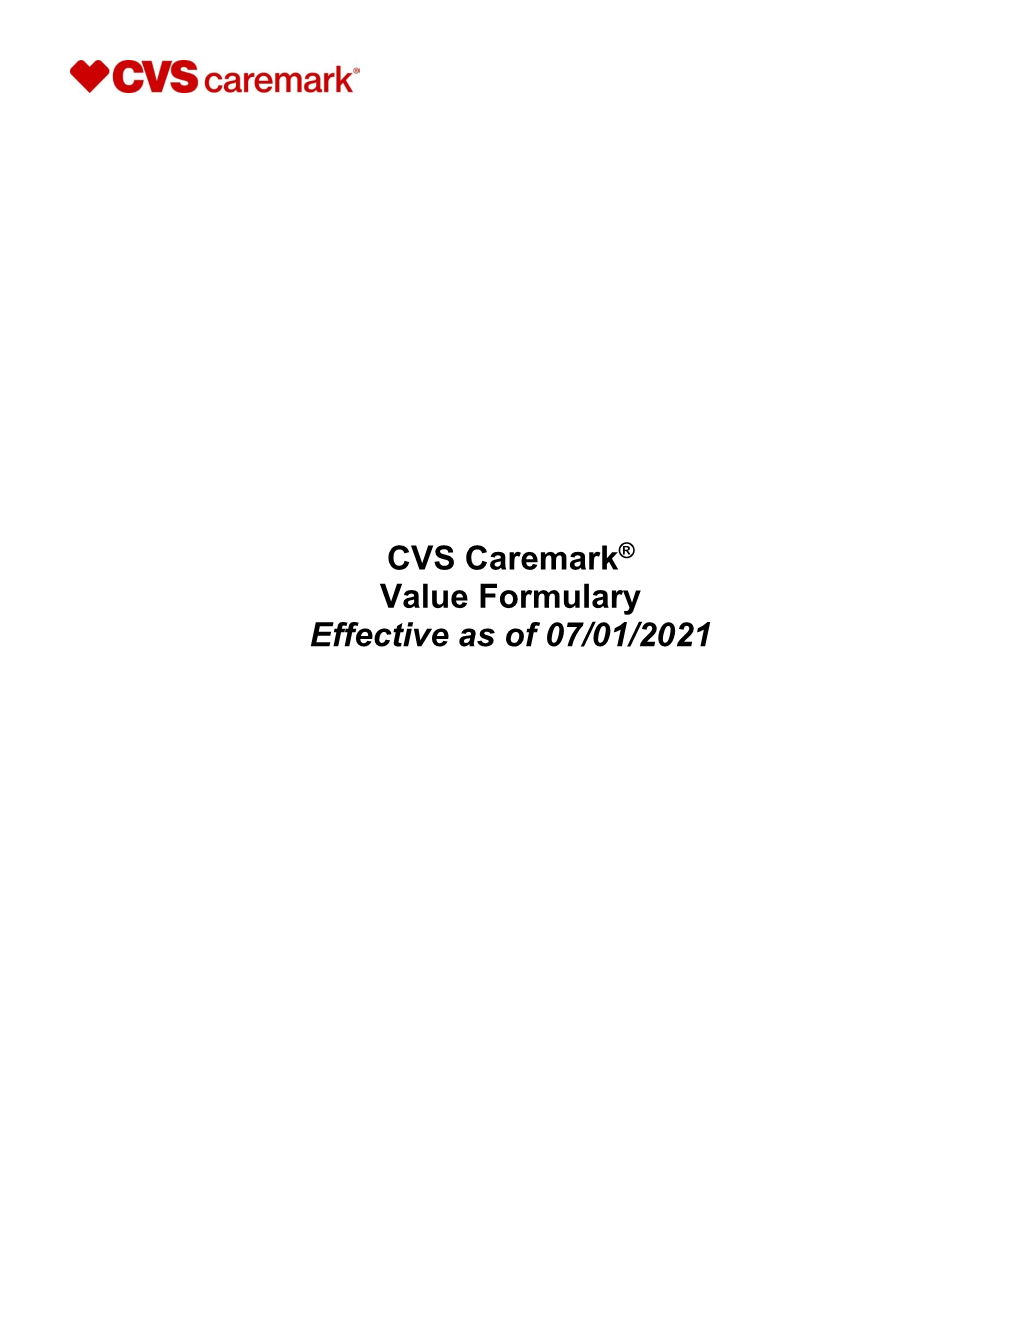 CVS Caremark® Value Formulary Effective As of 07/01/2021